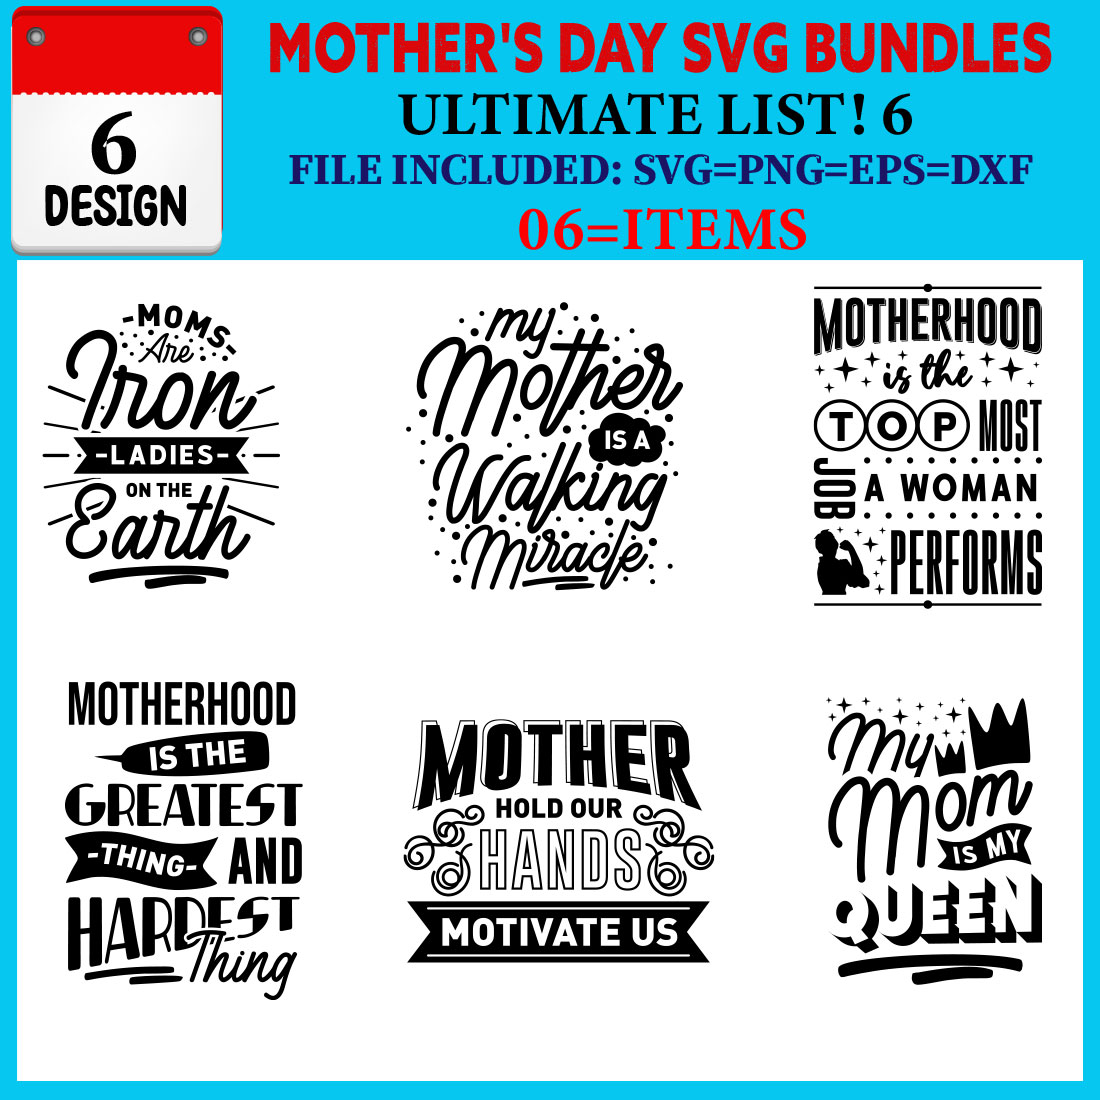 Mother's Day T-shirt Design Bundle Vol-22 cover image.